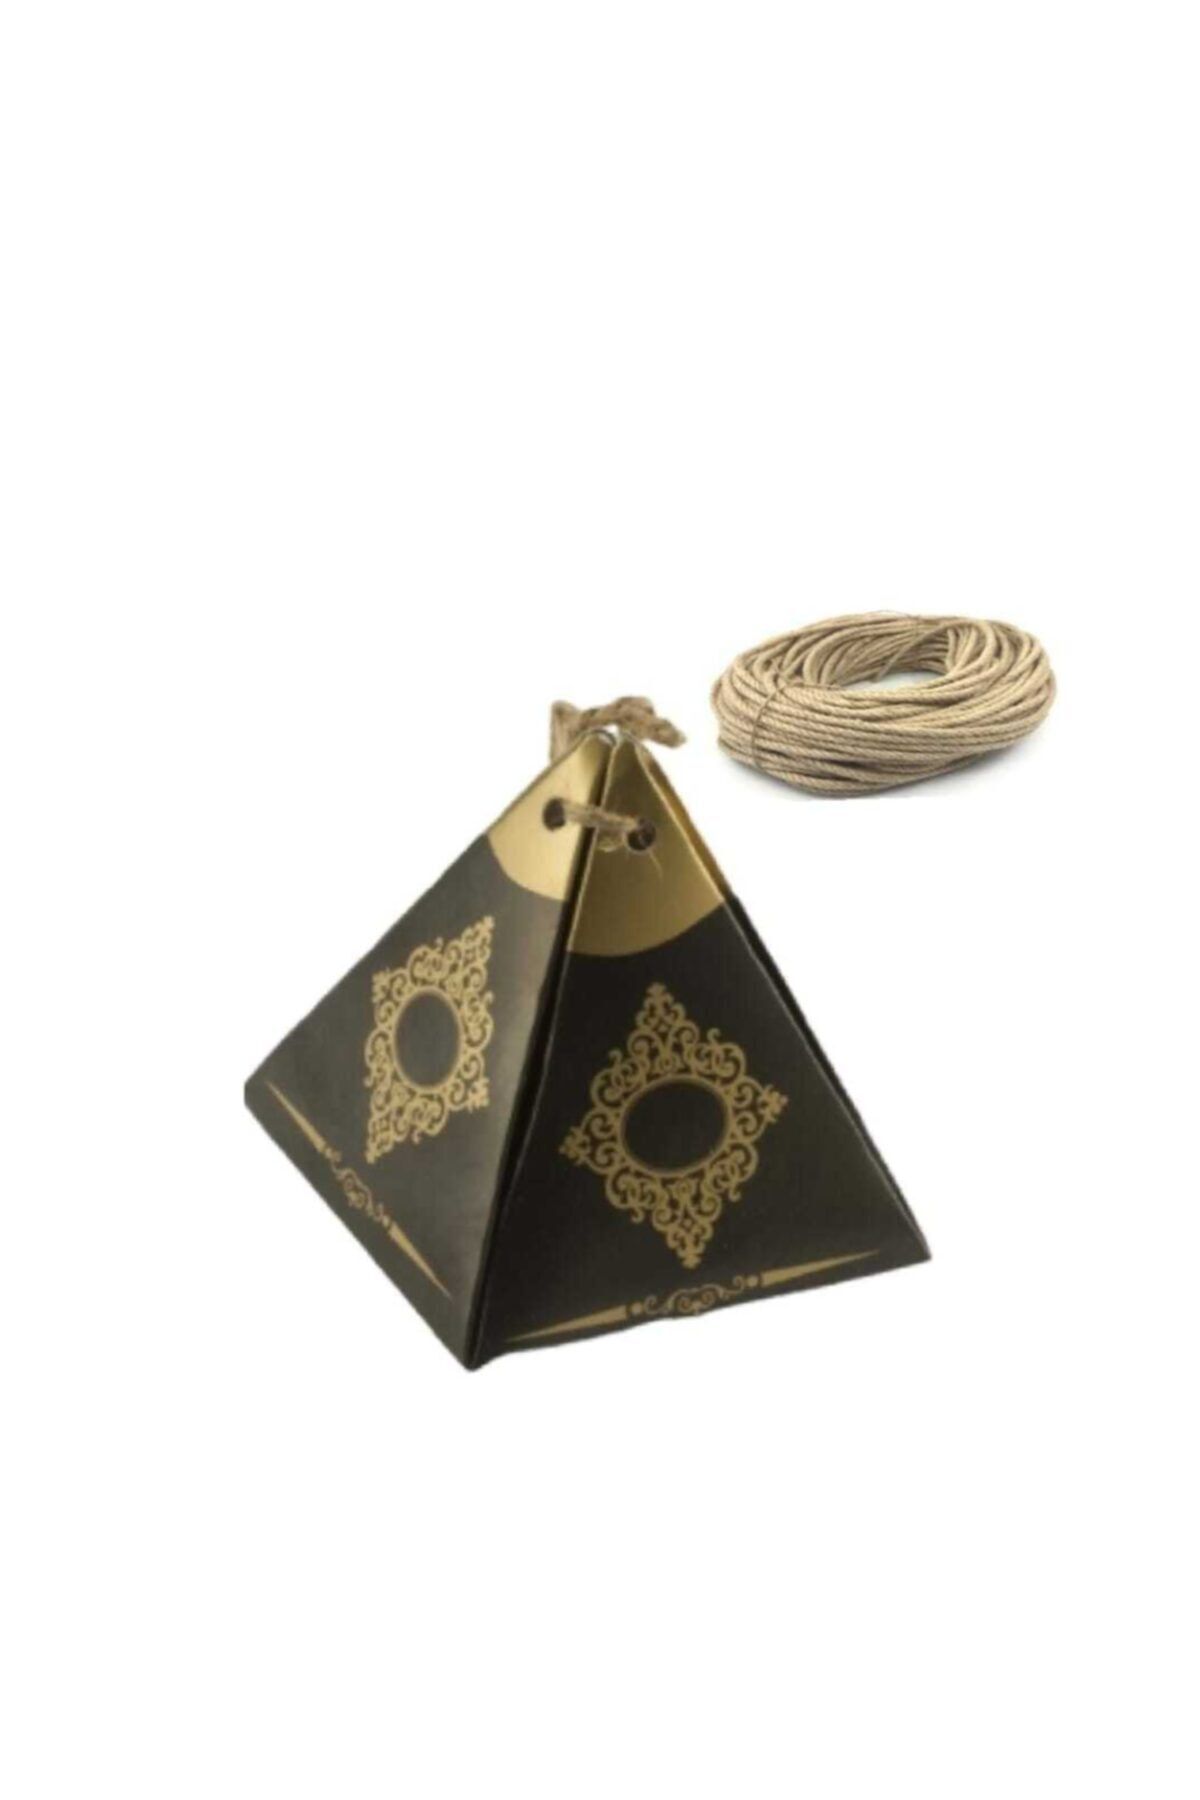 Genel Markalar Siyah Renk Altın Varaklı Piramit Lokum / Şeker Kutusu 50 Adet/ 10 Metre Jüt Ip